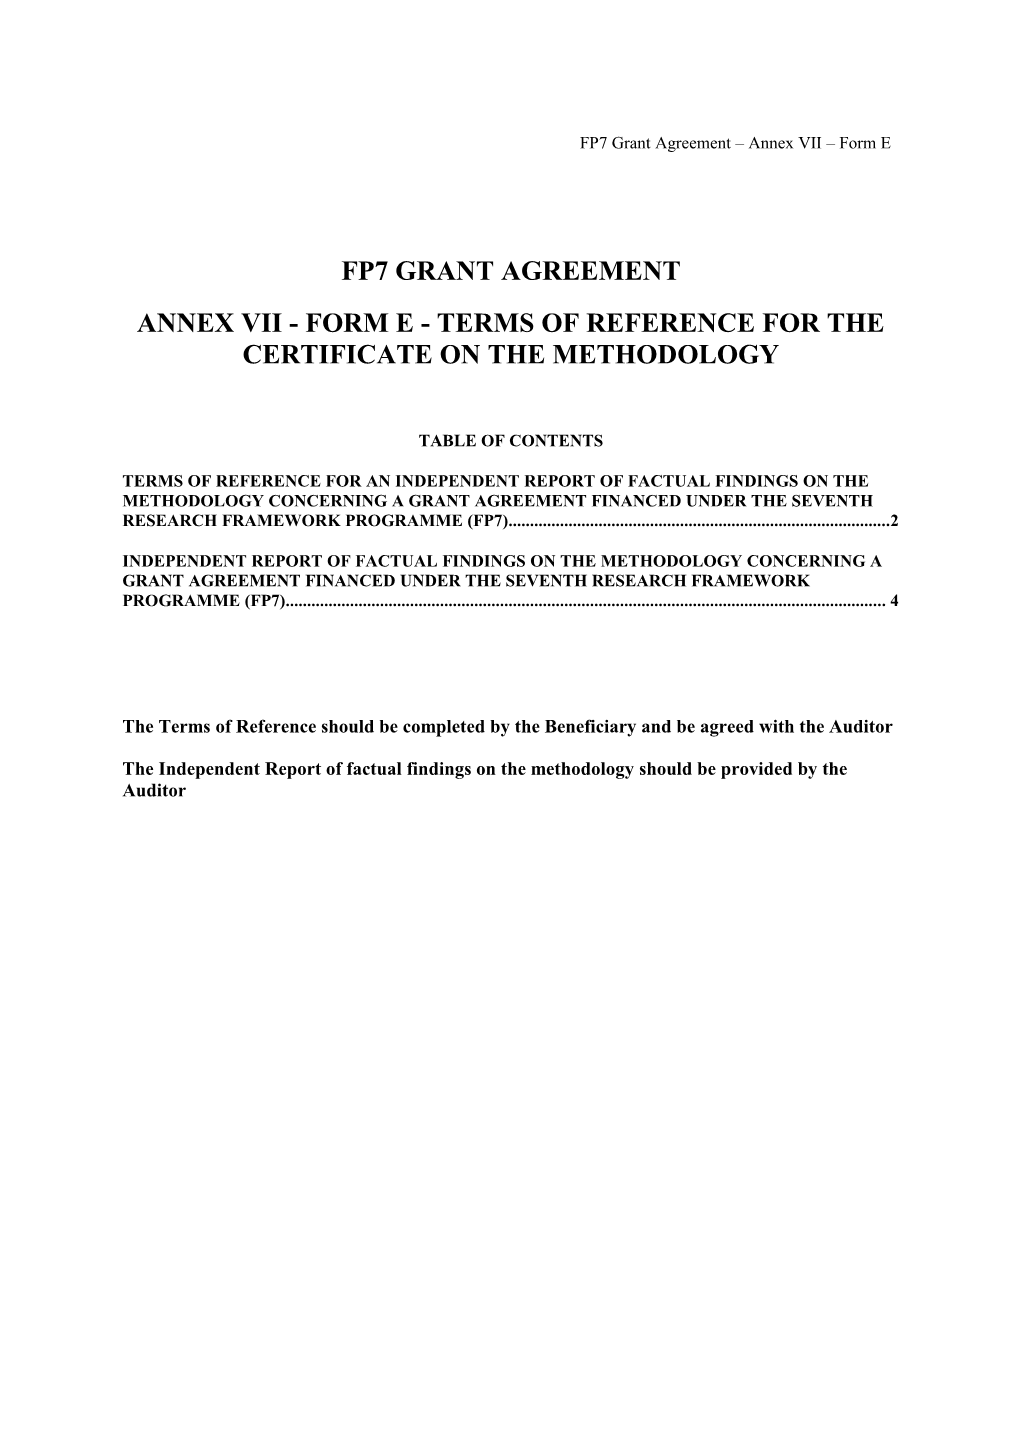 Seventh Framework Programme Grant Agreement - Annex Vii - Form E